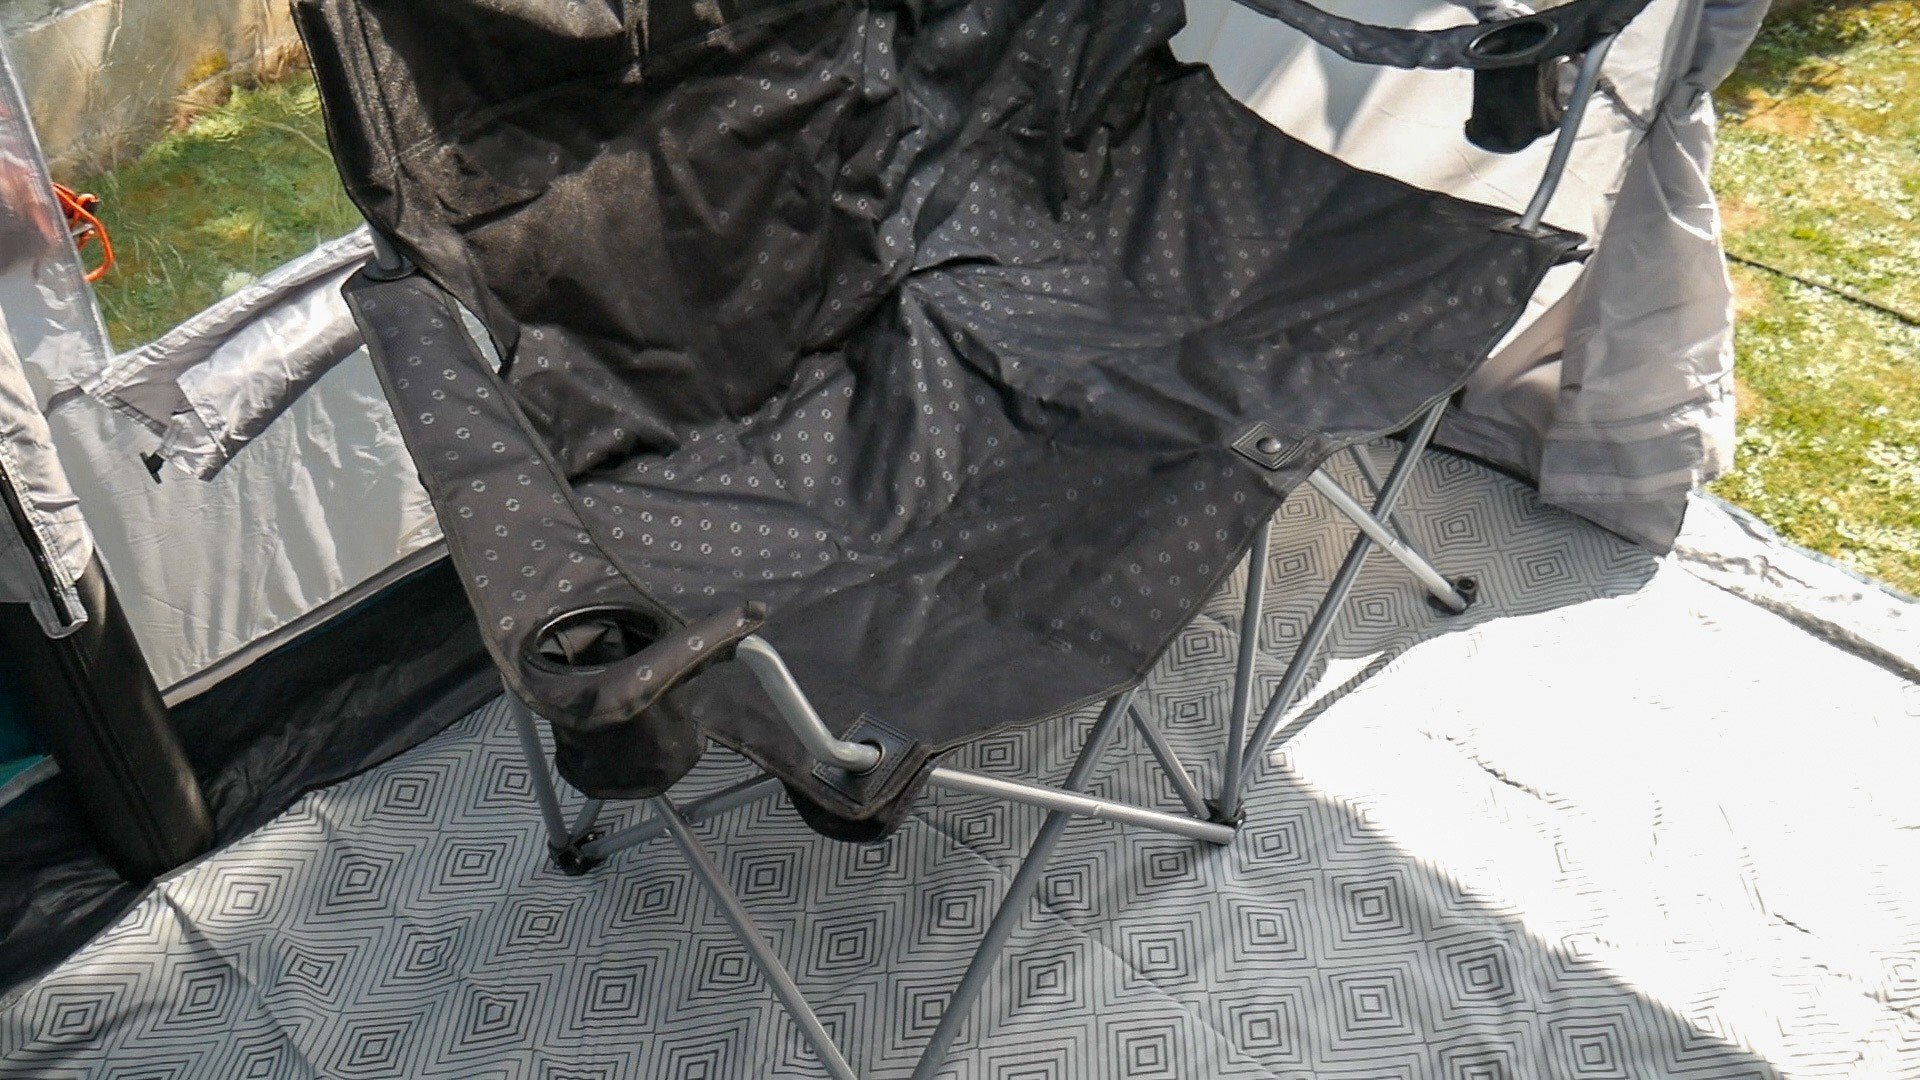 Catamarca inside the tent